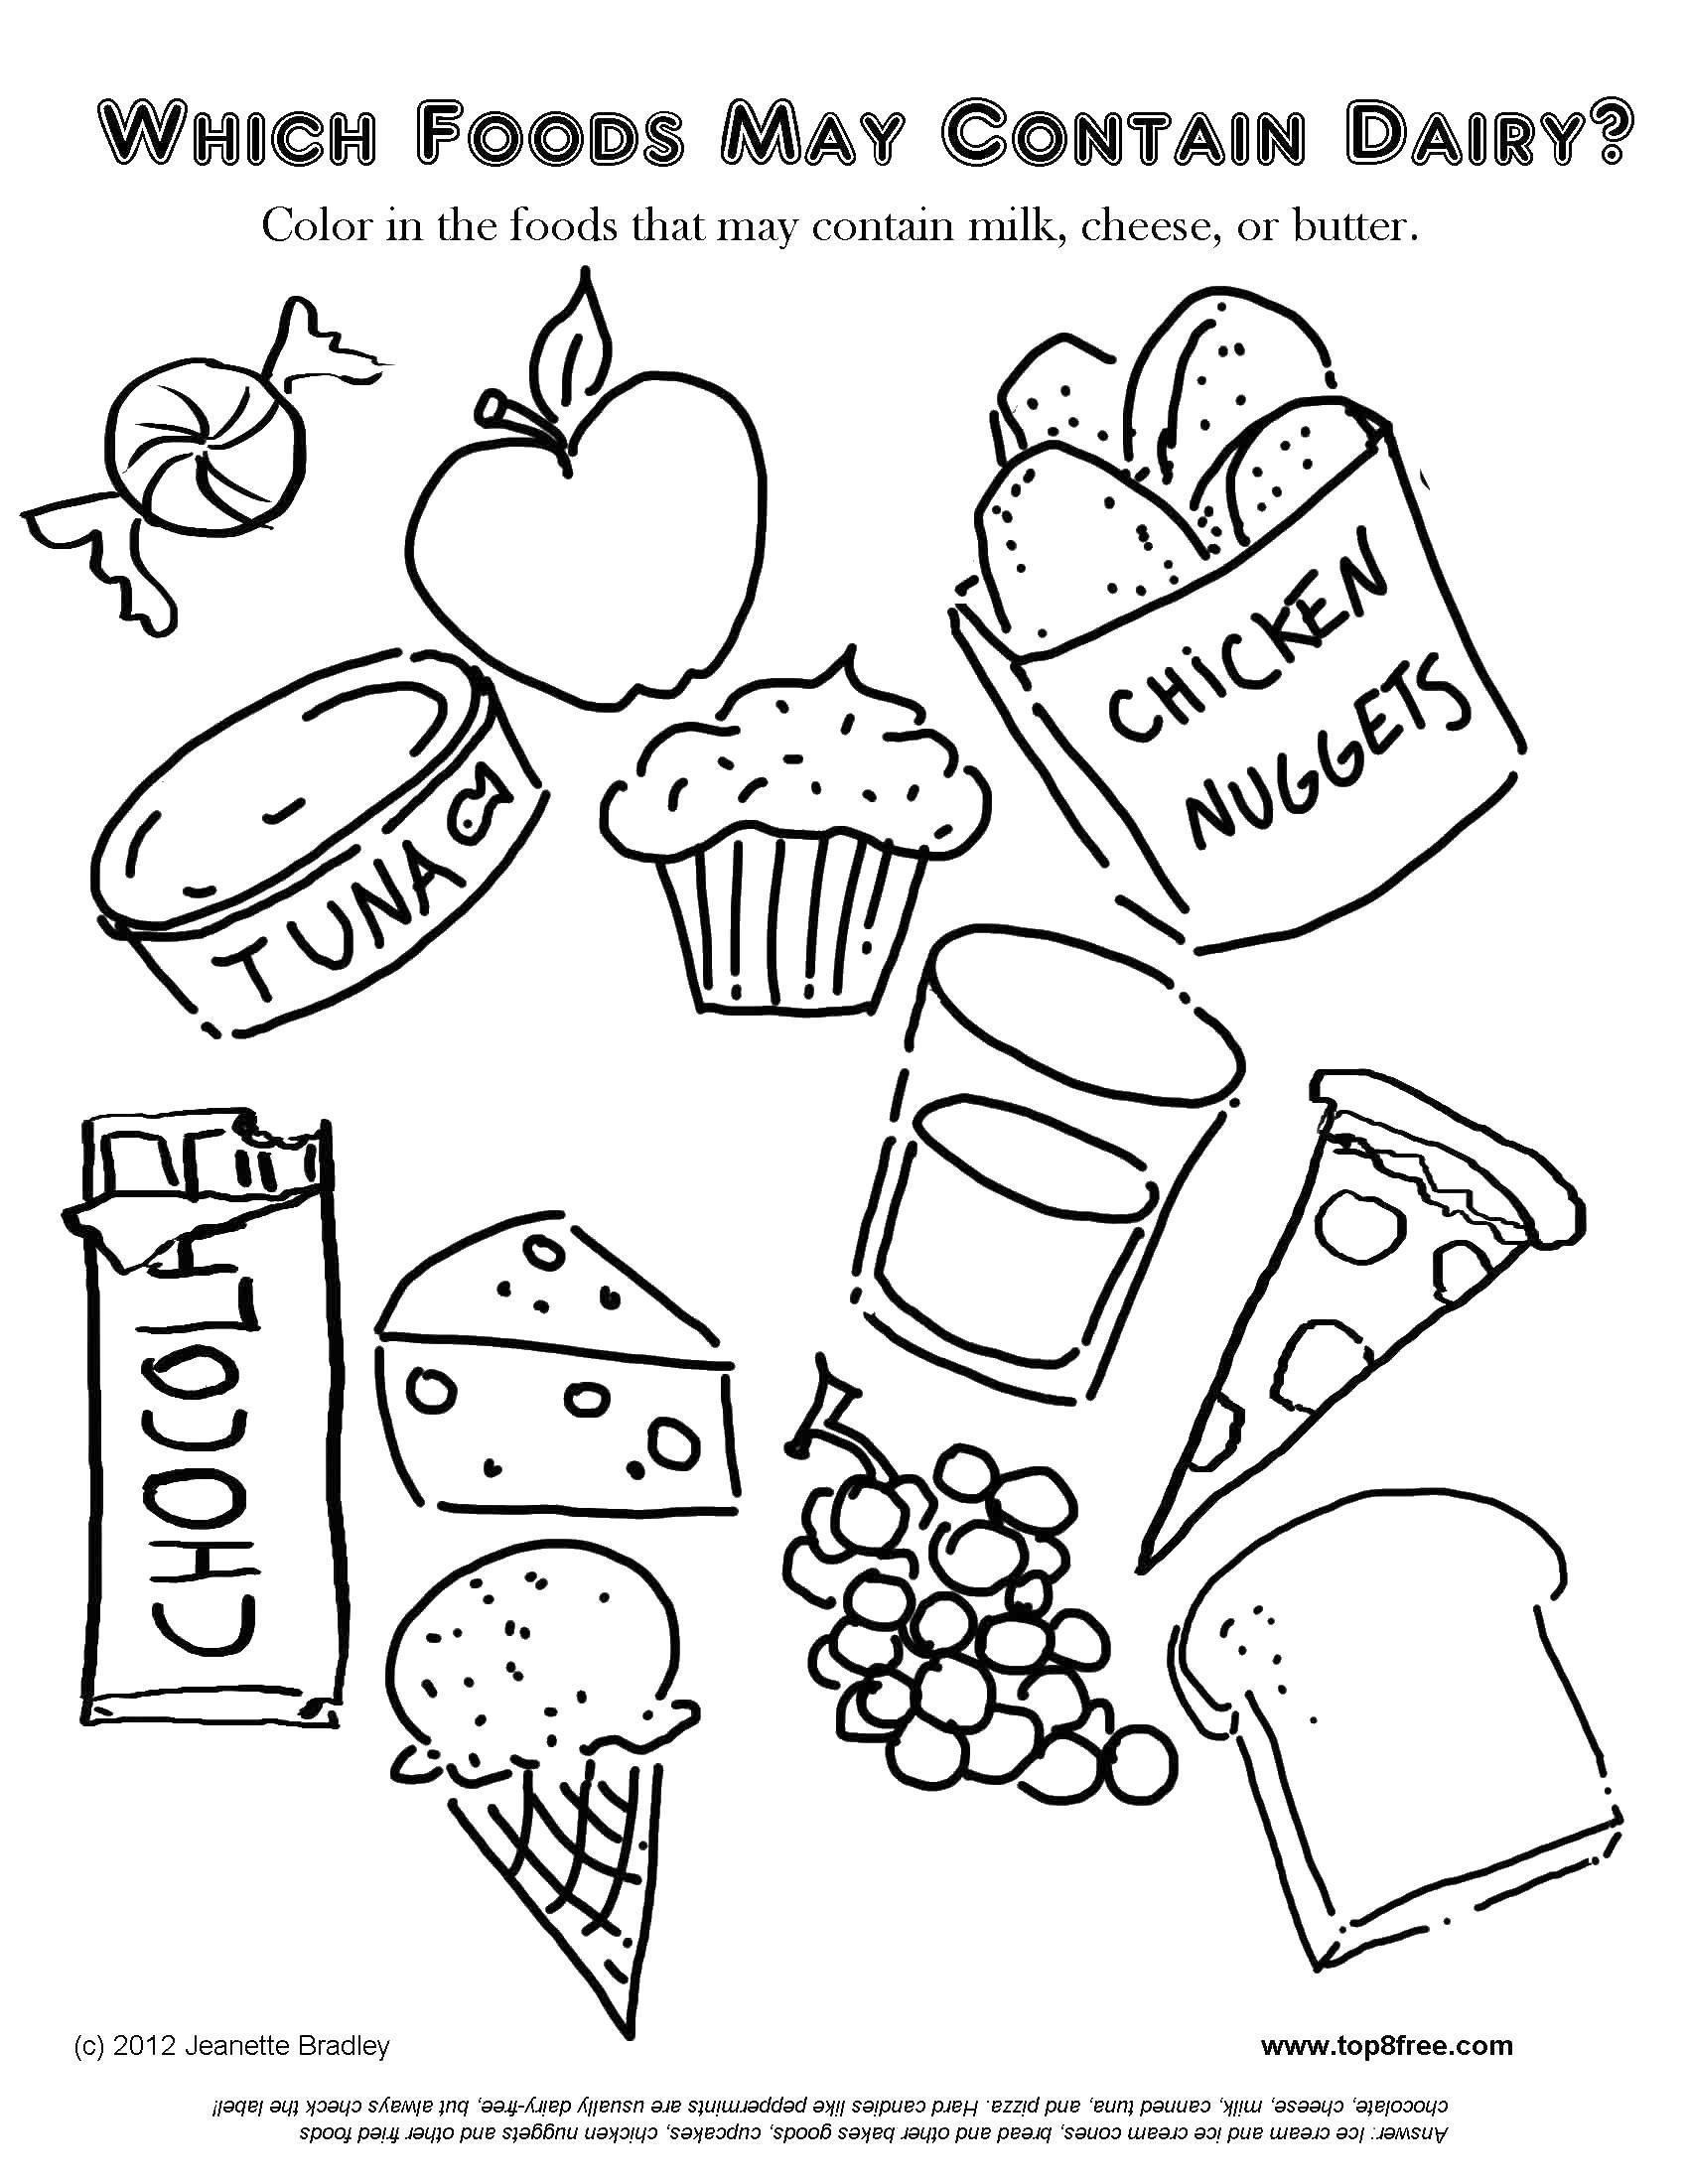 Опис: розмальовки  Розфарбуй продукти в яких є молоко, сир або масло. Категорія: їжа. Теги:  їжа, на мислення.